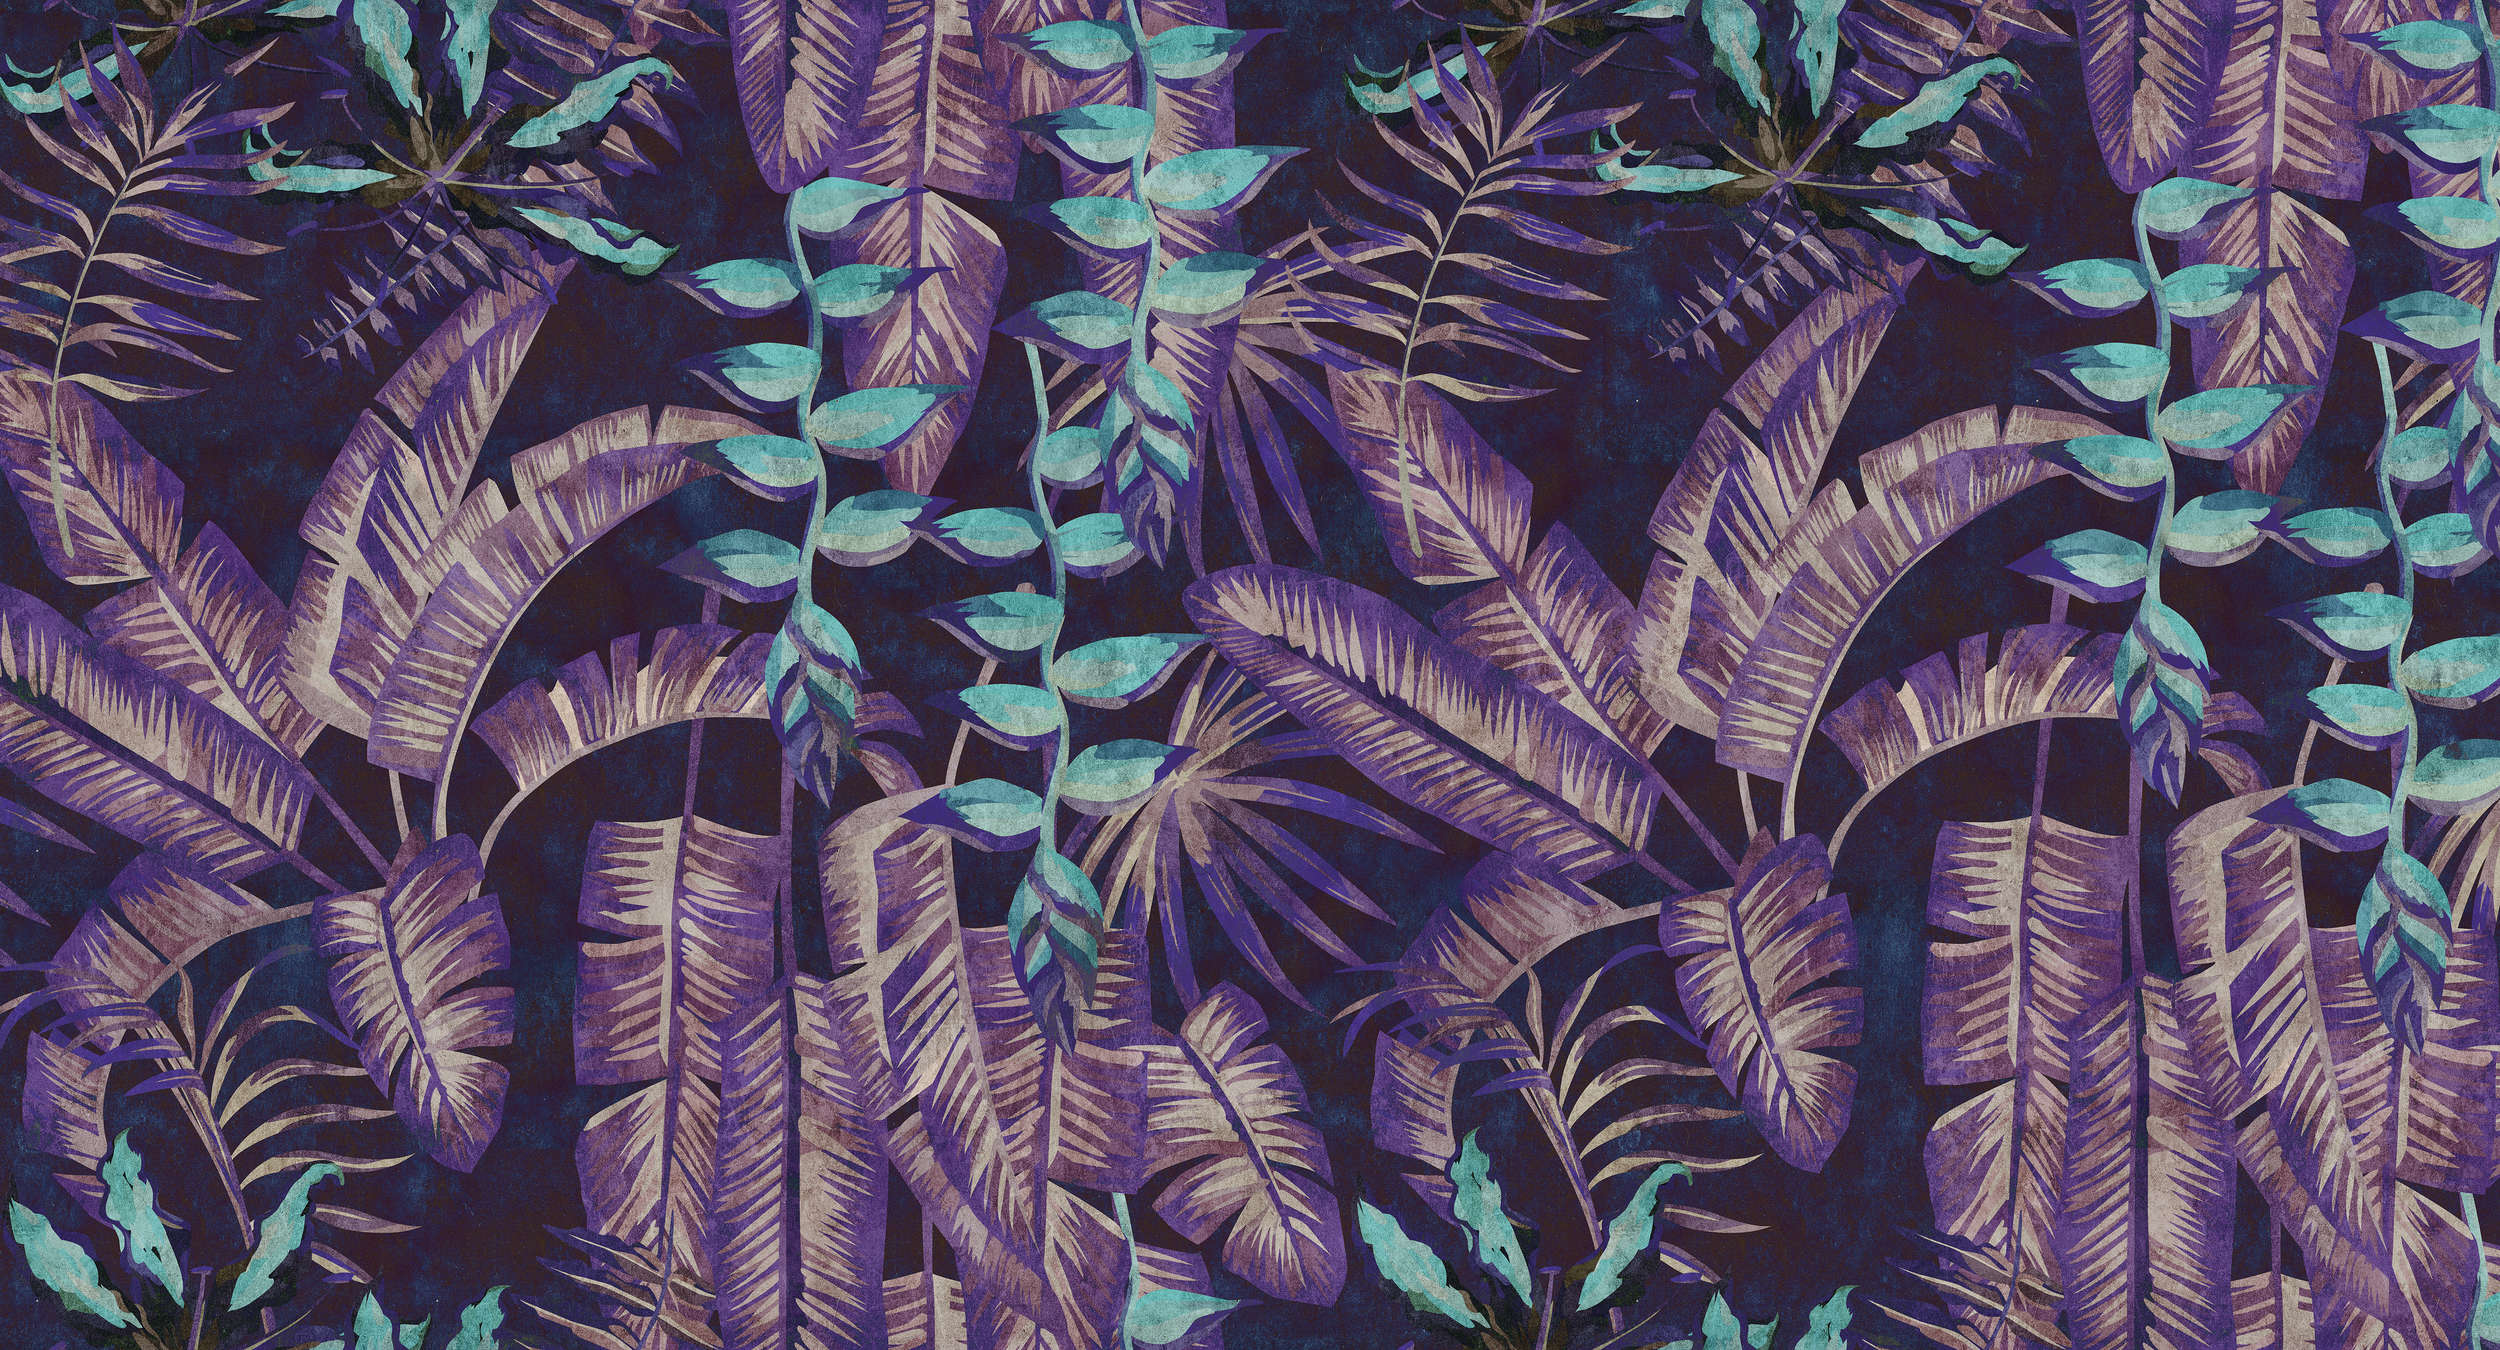             Tropicana 6 - digitale print behang in vloeipapier structuur met jungle motief - turquoise, violet | structuur vlieseline
        